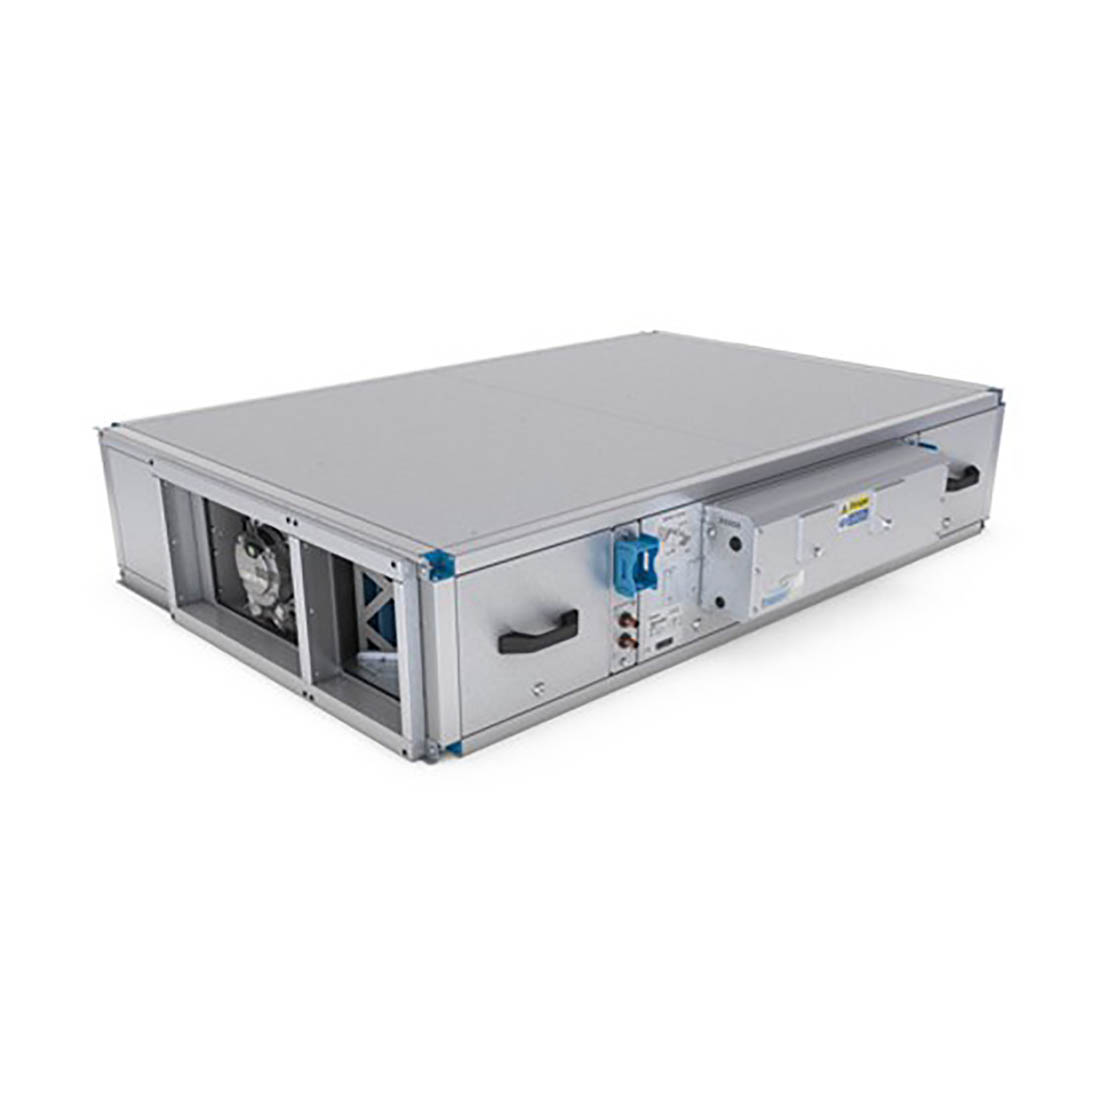 Nuaire Xboxer XBC-45 Commercial Heat Exchange Unit - (Price Varies Upon Appraisal)